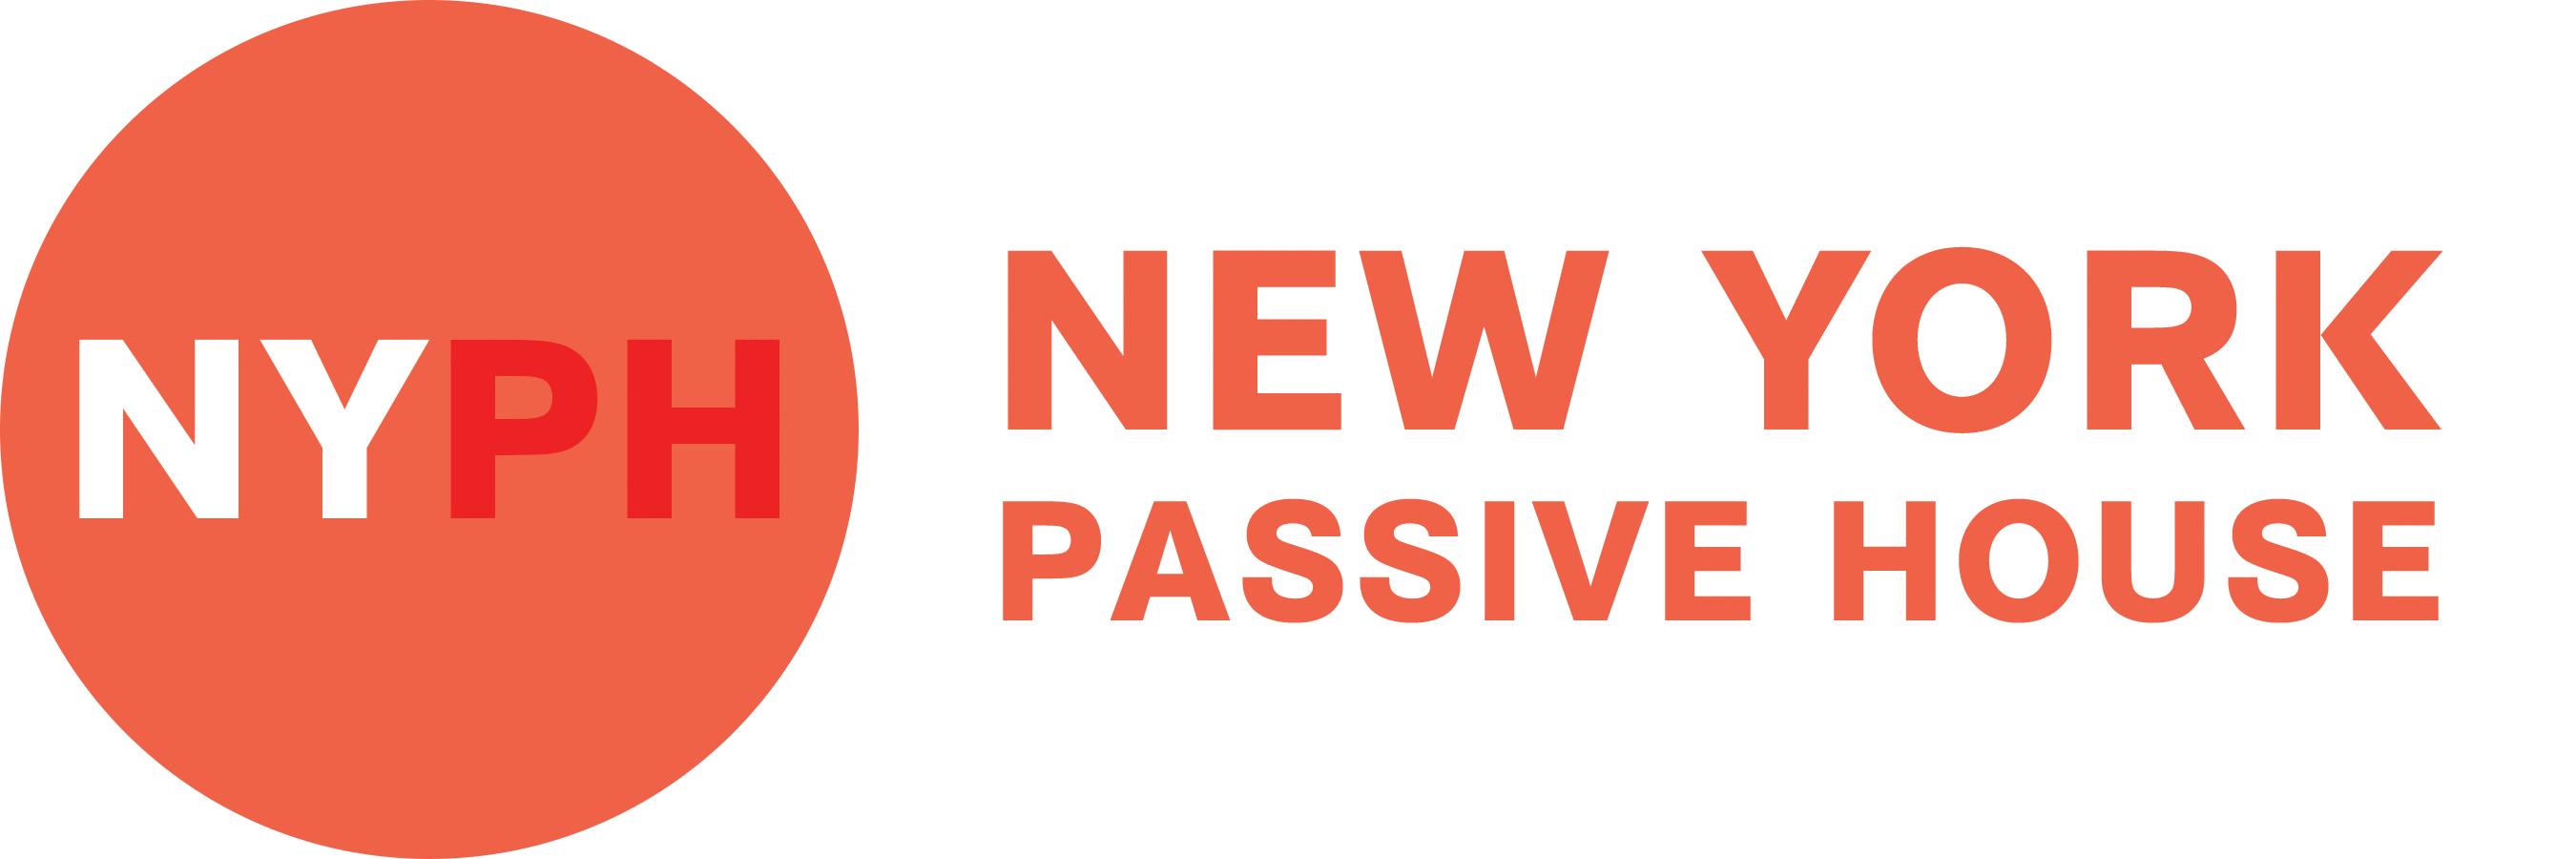 NYPH New York Passive House